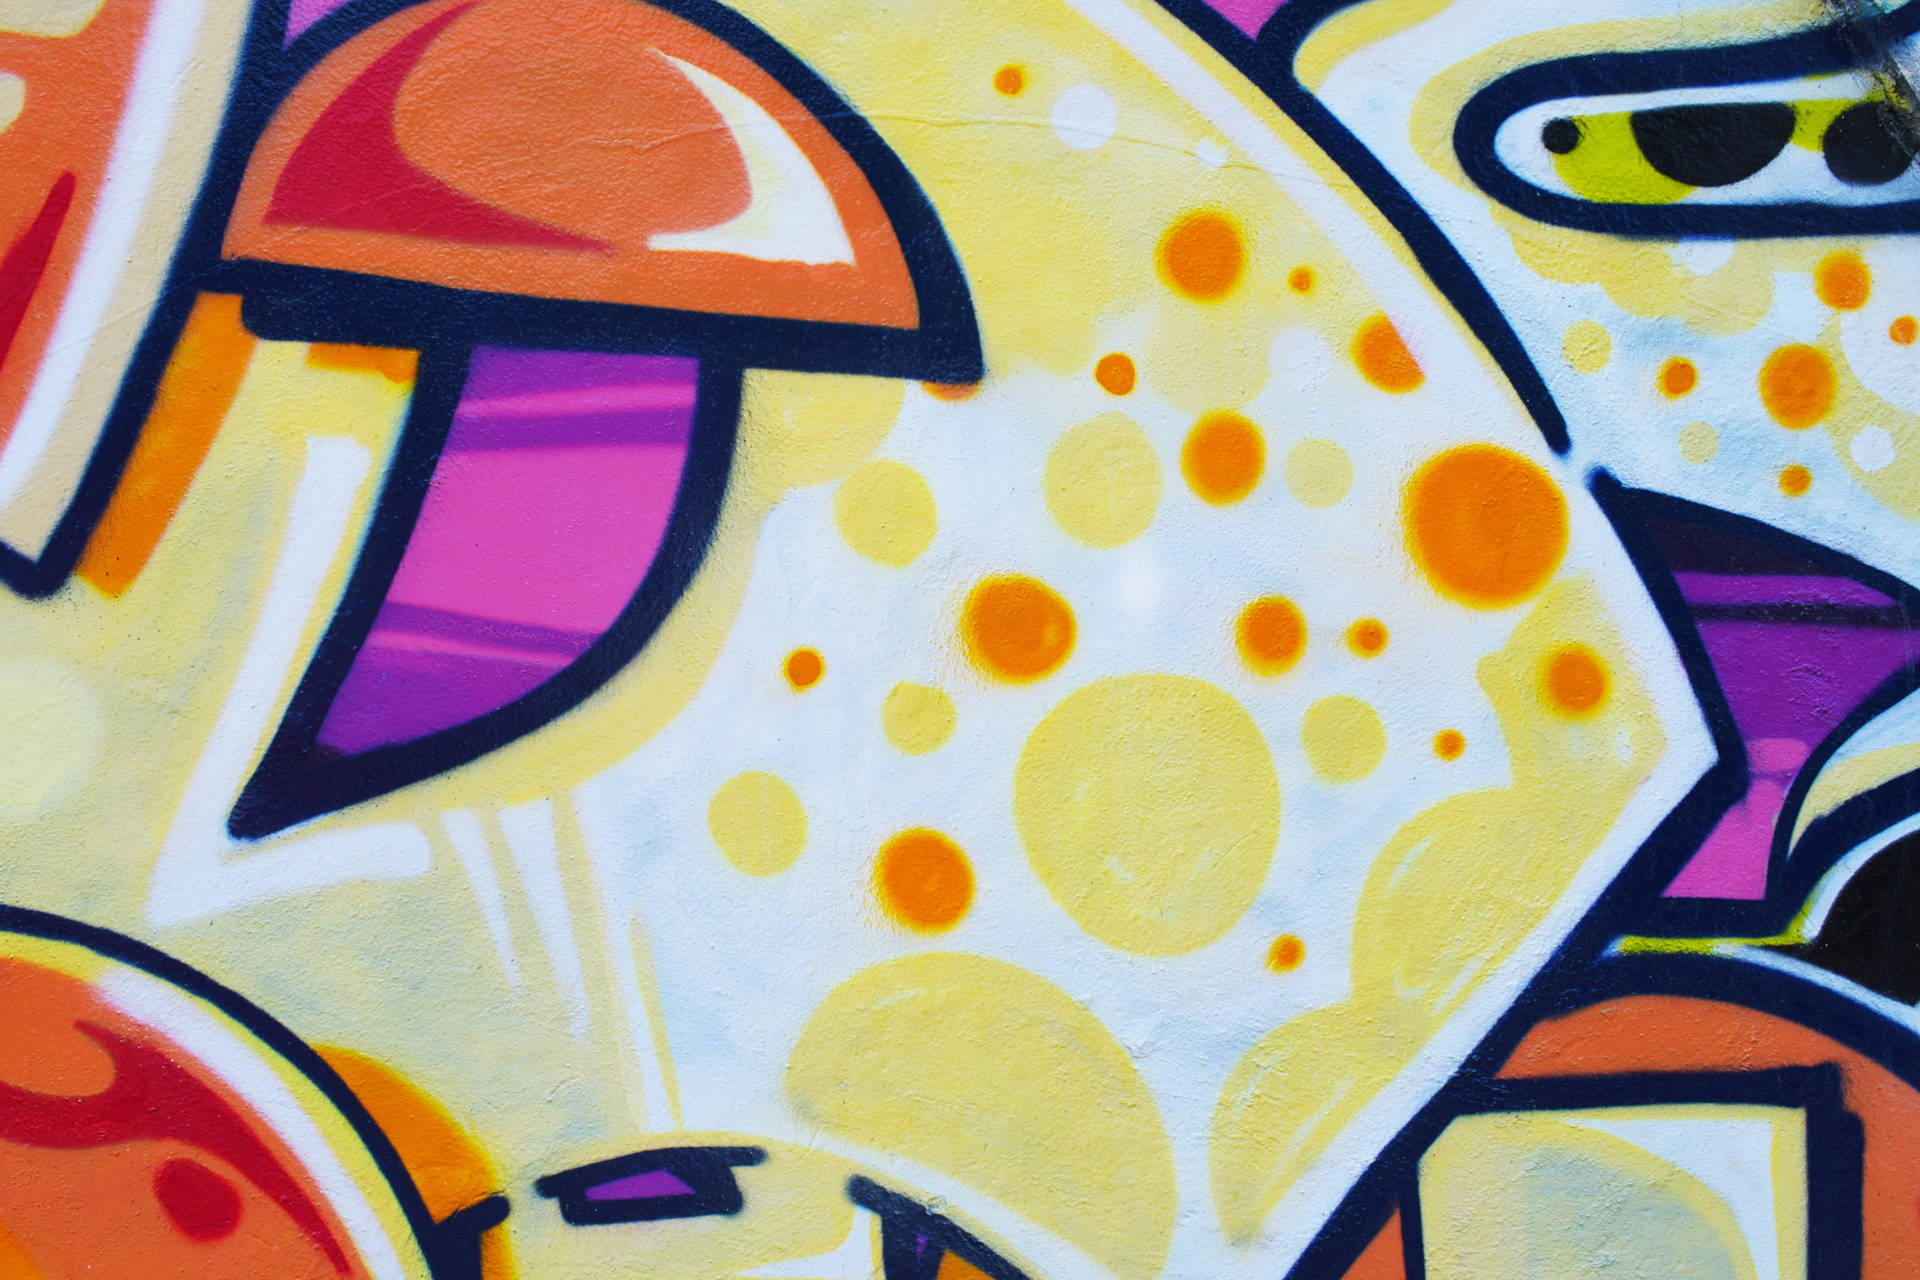 Graffiti Complex Abstract Wallpaper